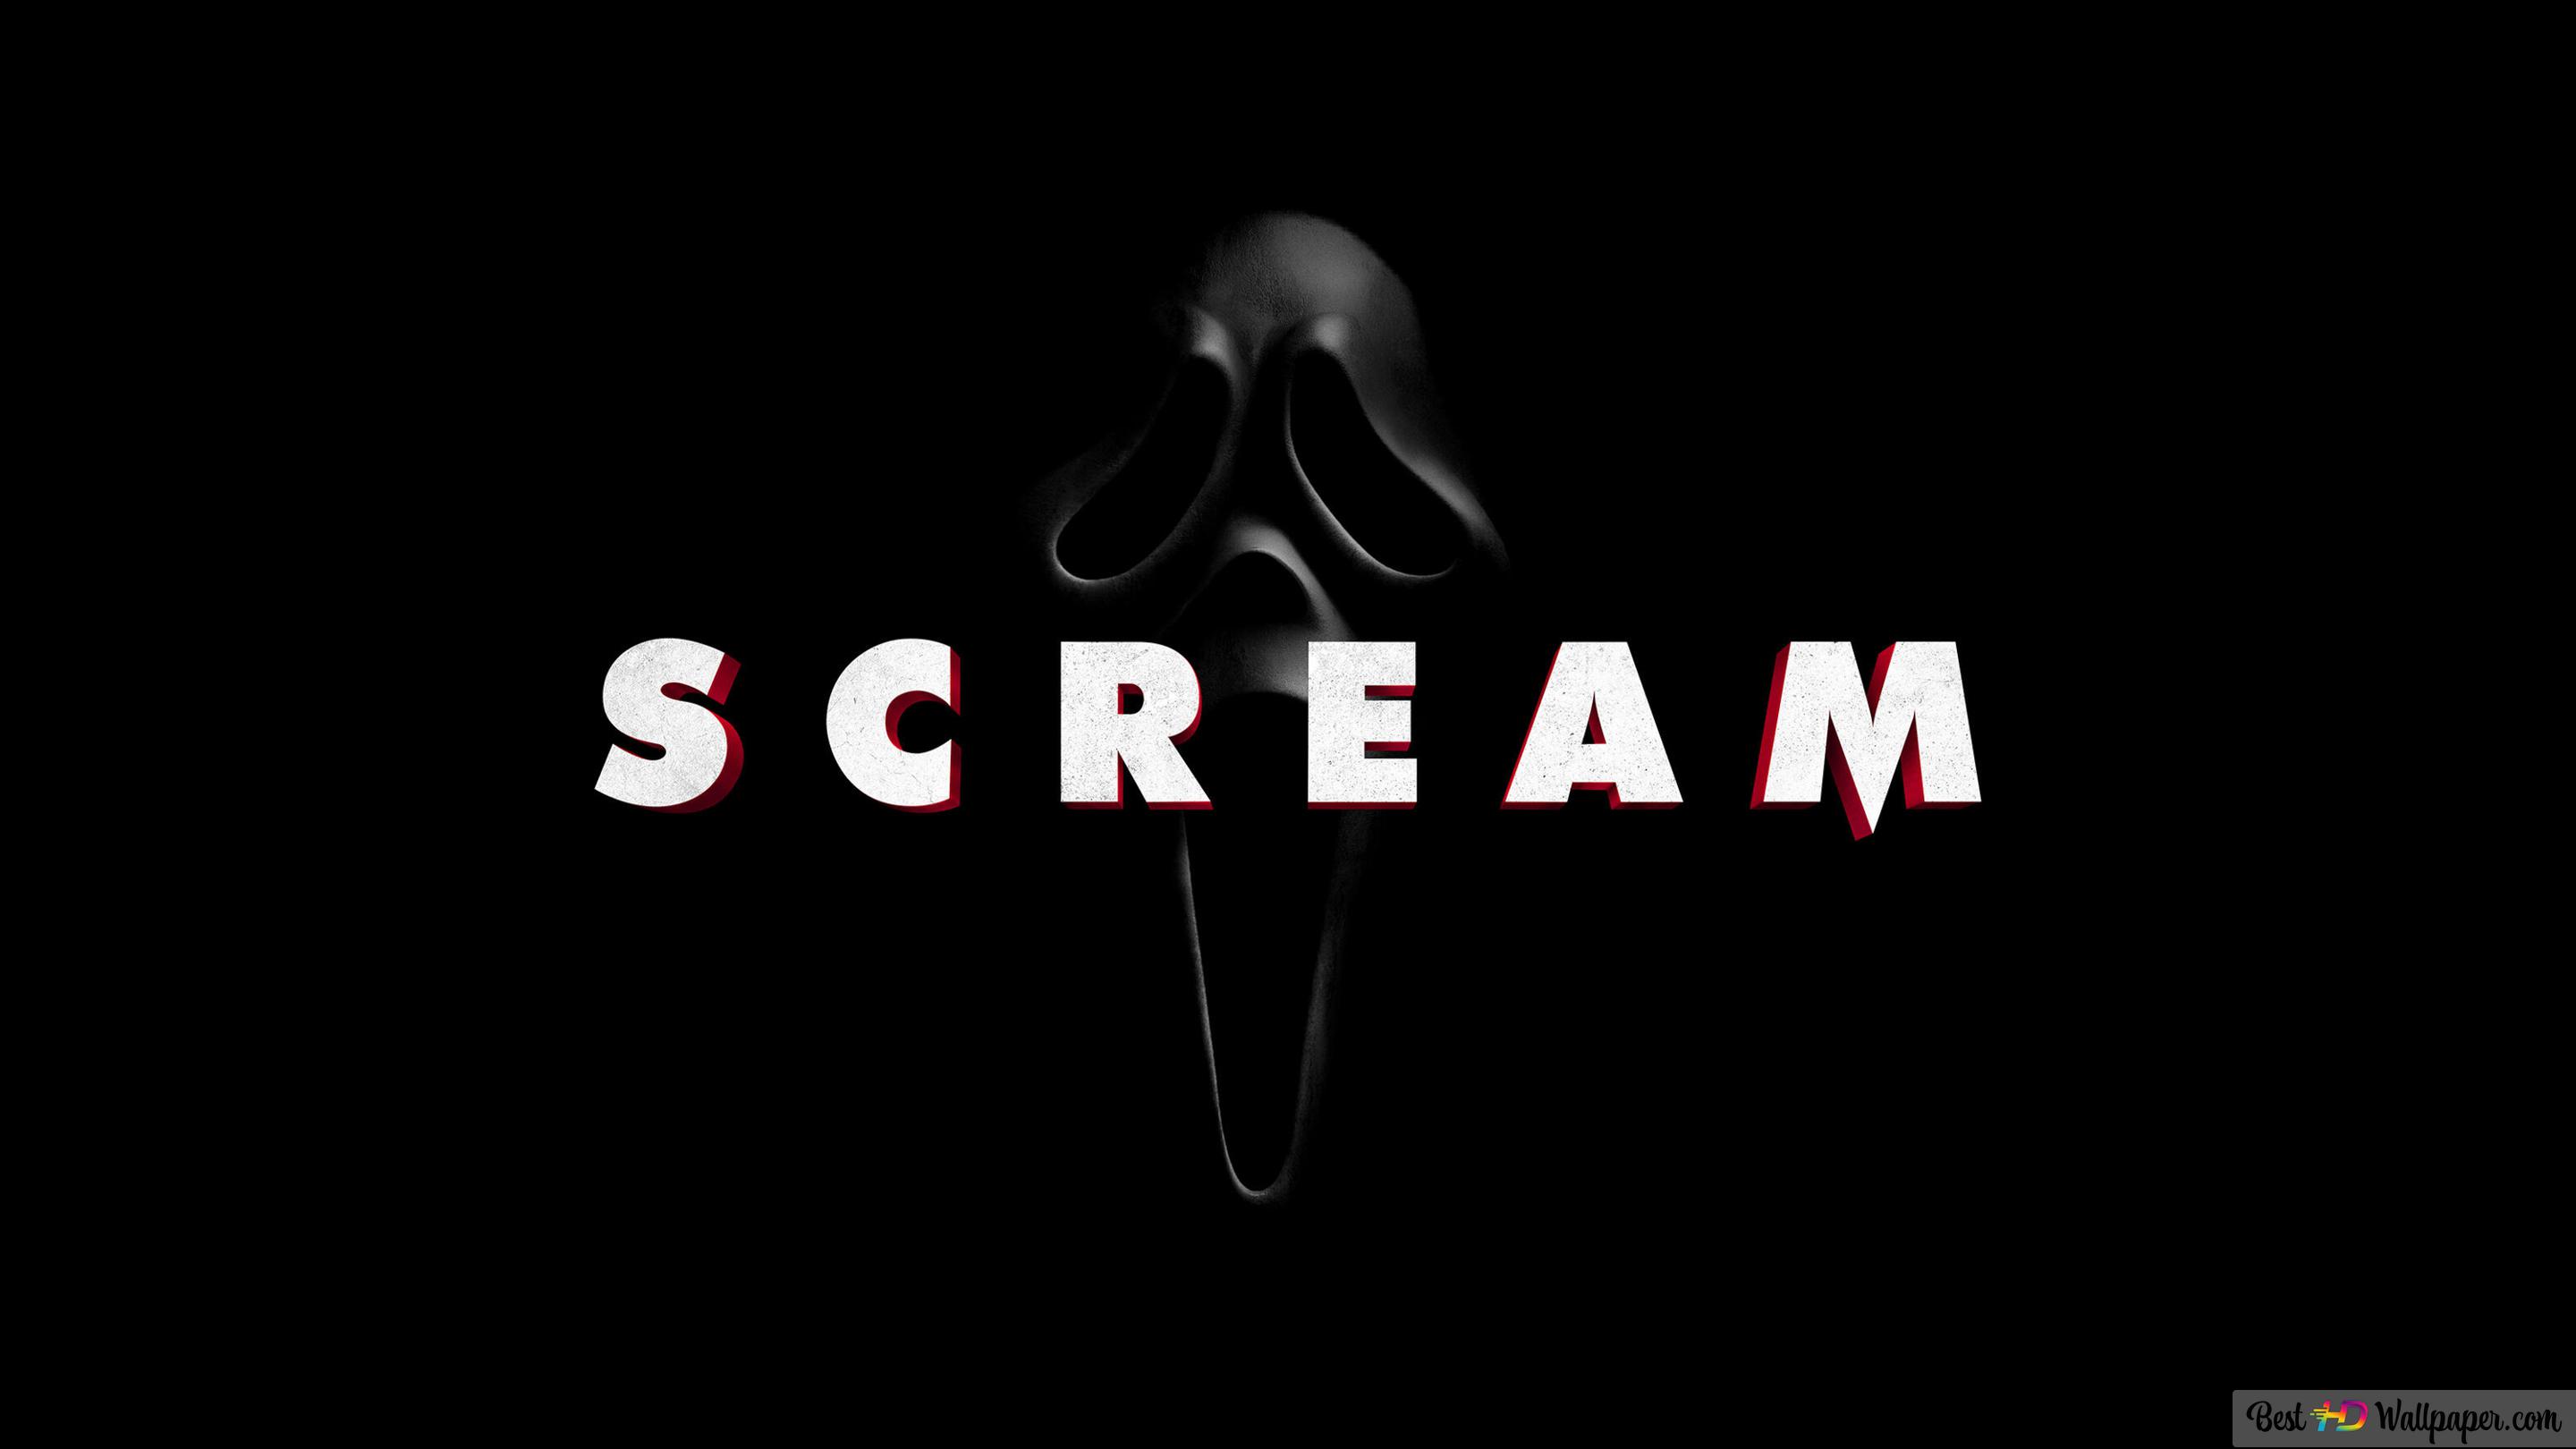 Scream 5 movie soon HD wallpaper download